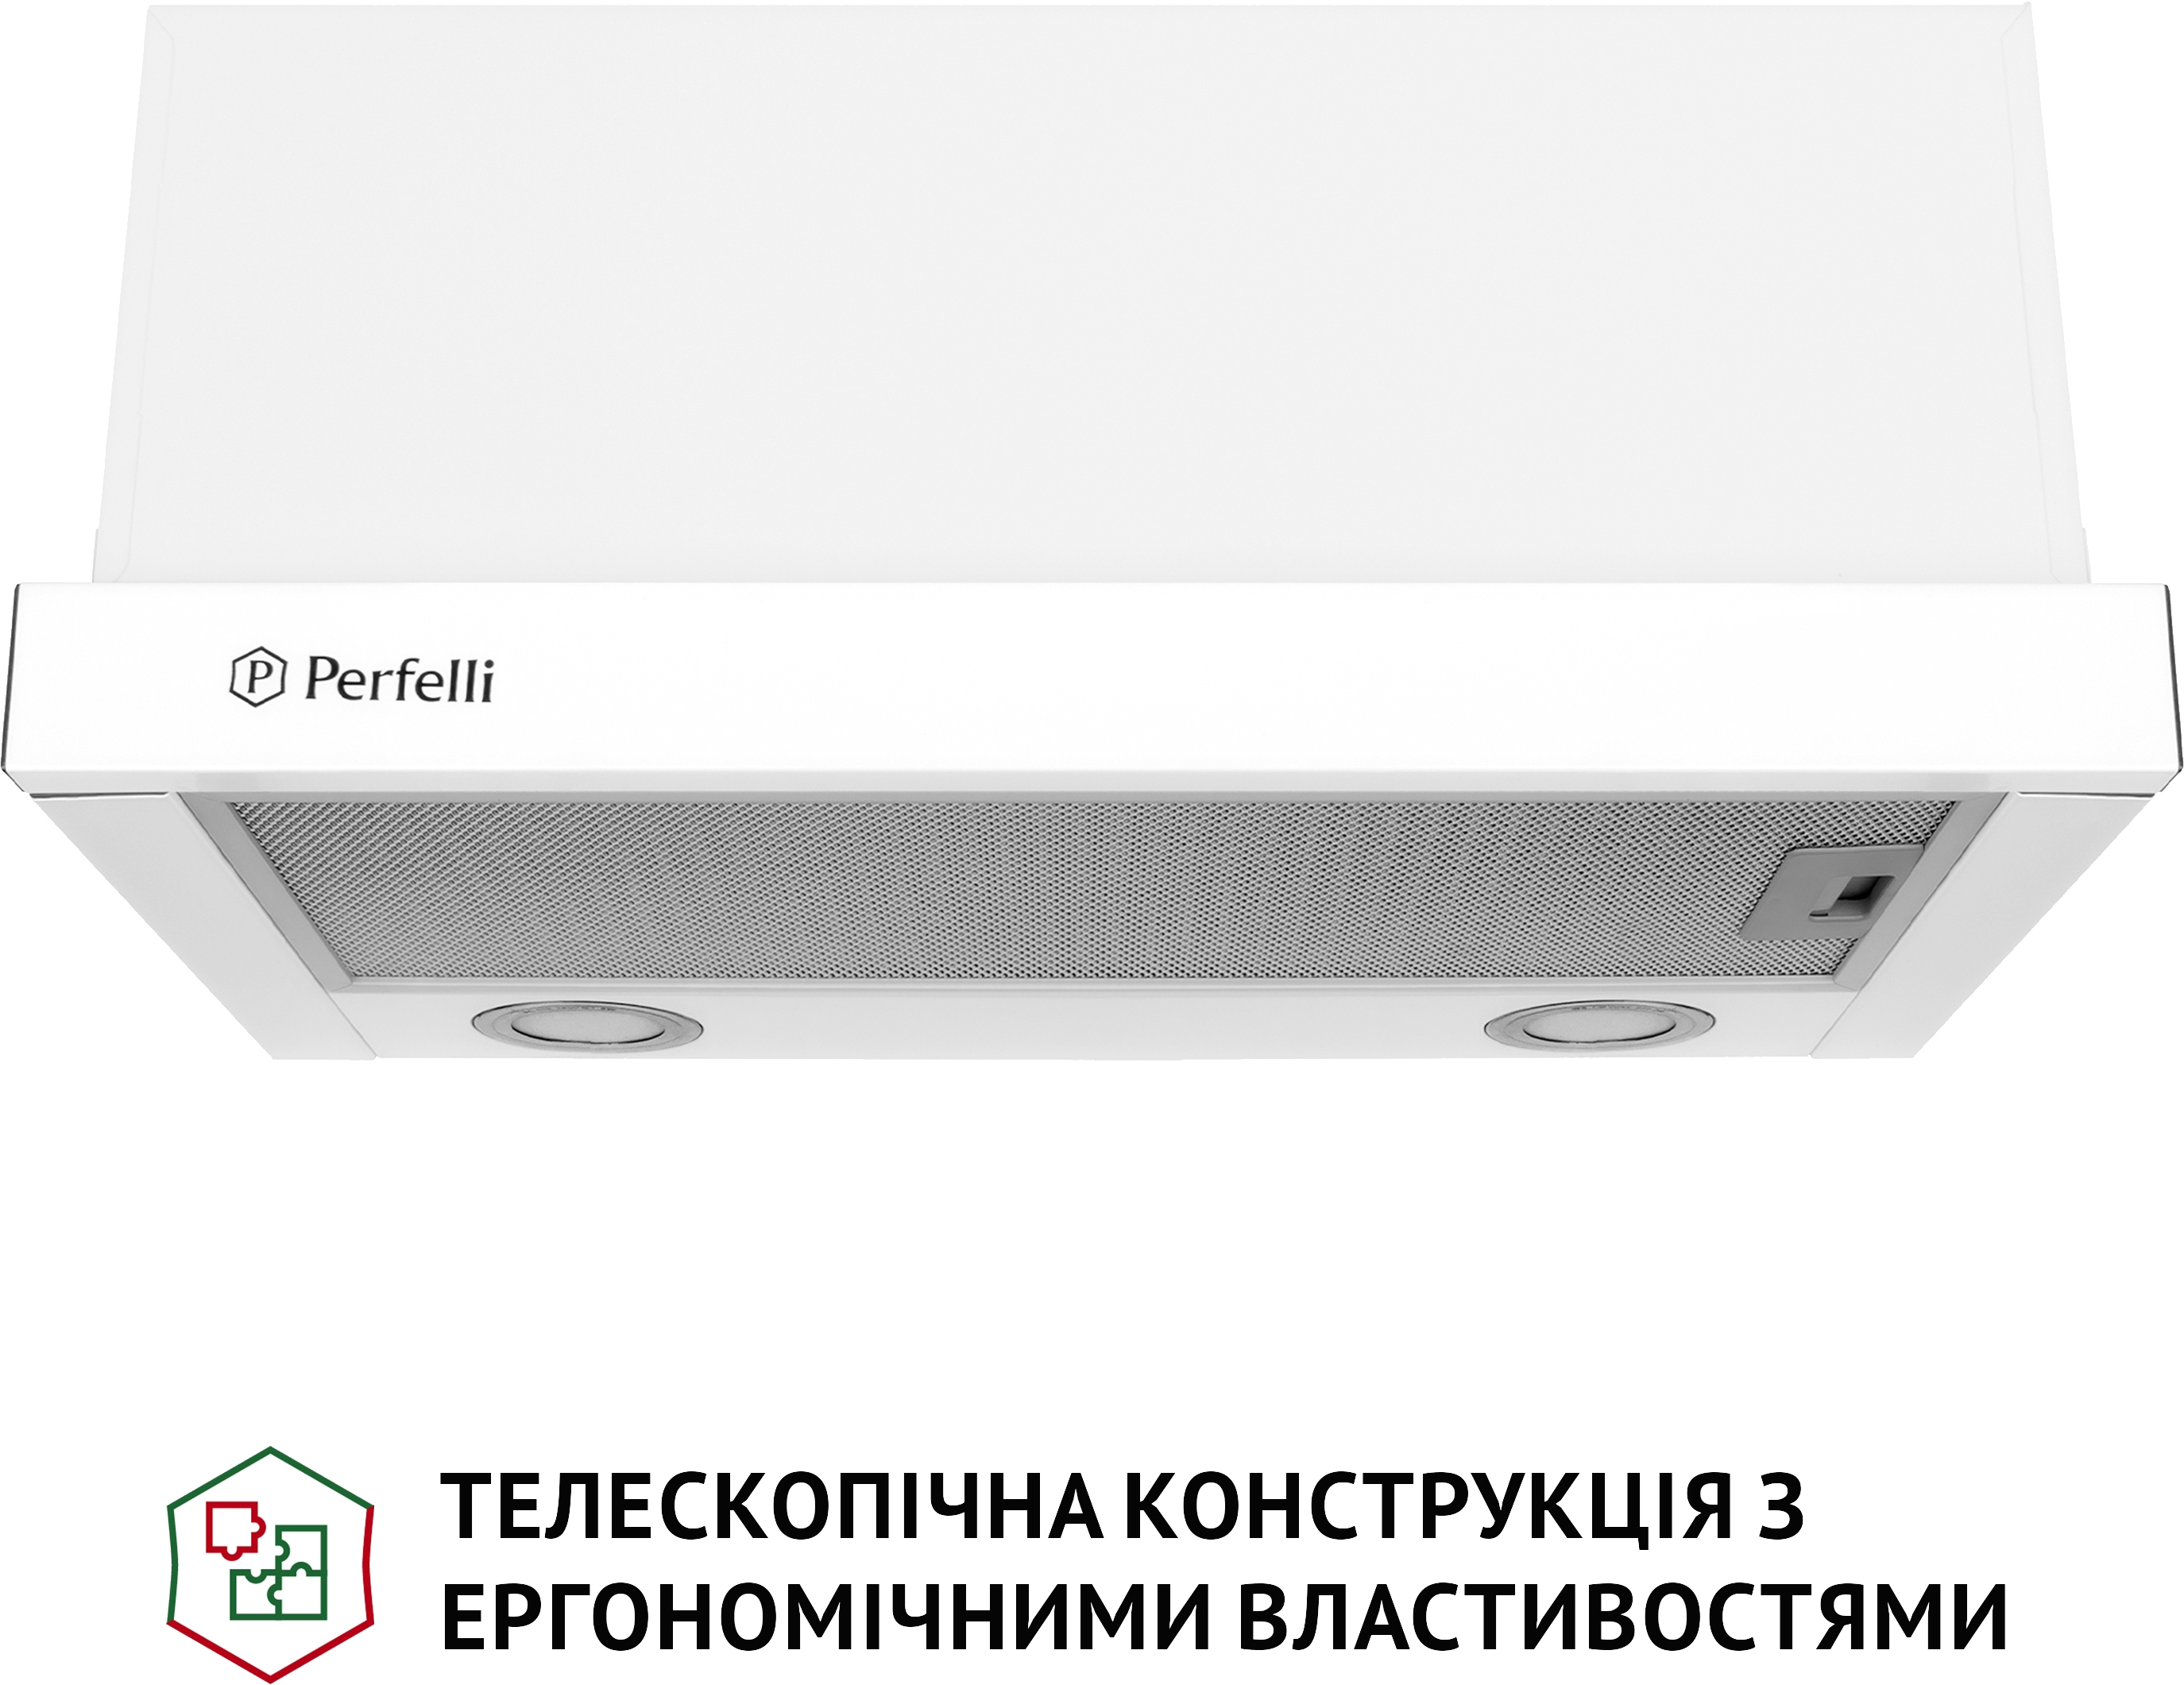 Вытяжка кухонная Perfelli TL 5212 WH 700 LED цена 2989.00 грн - фотография 2